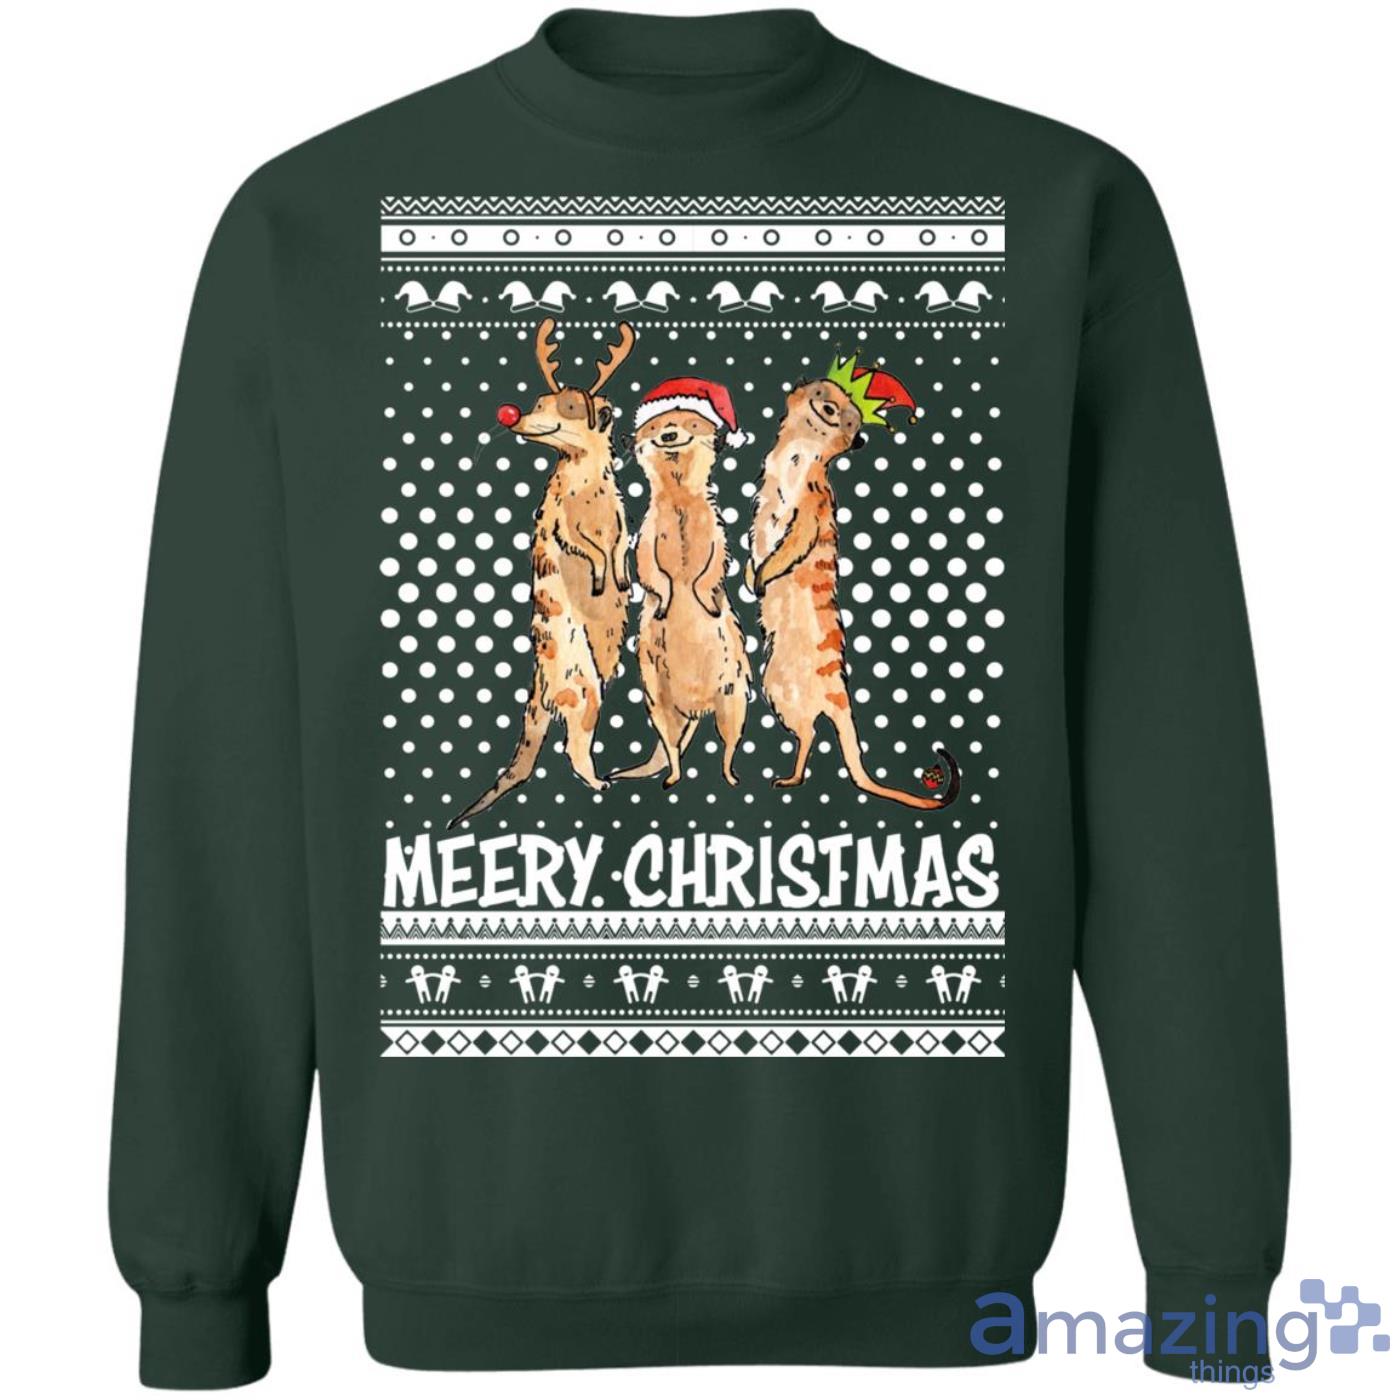 Meery Merry Christmas Meerkat Humour Animals Sweatshirt Product Photo 1